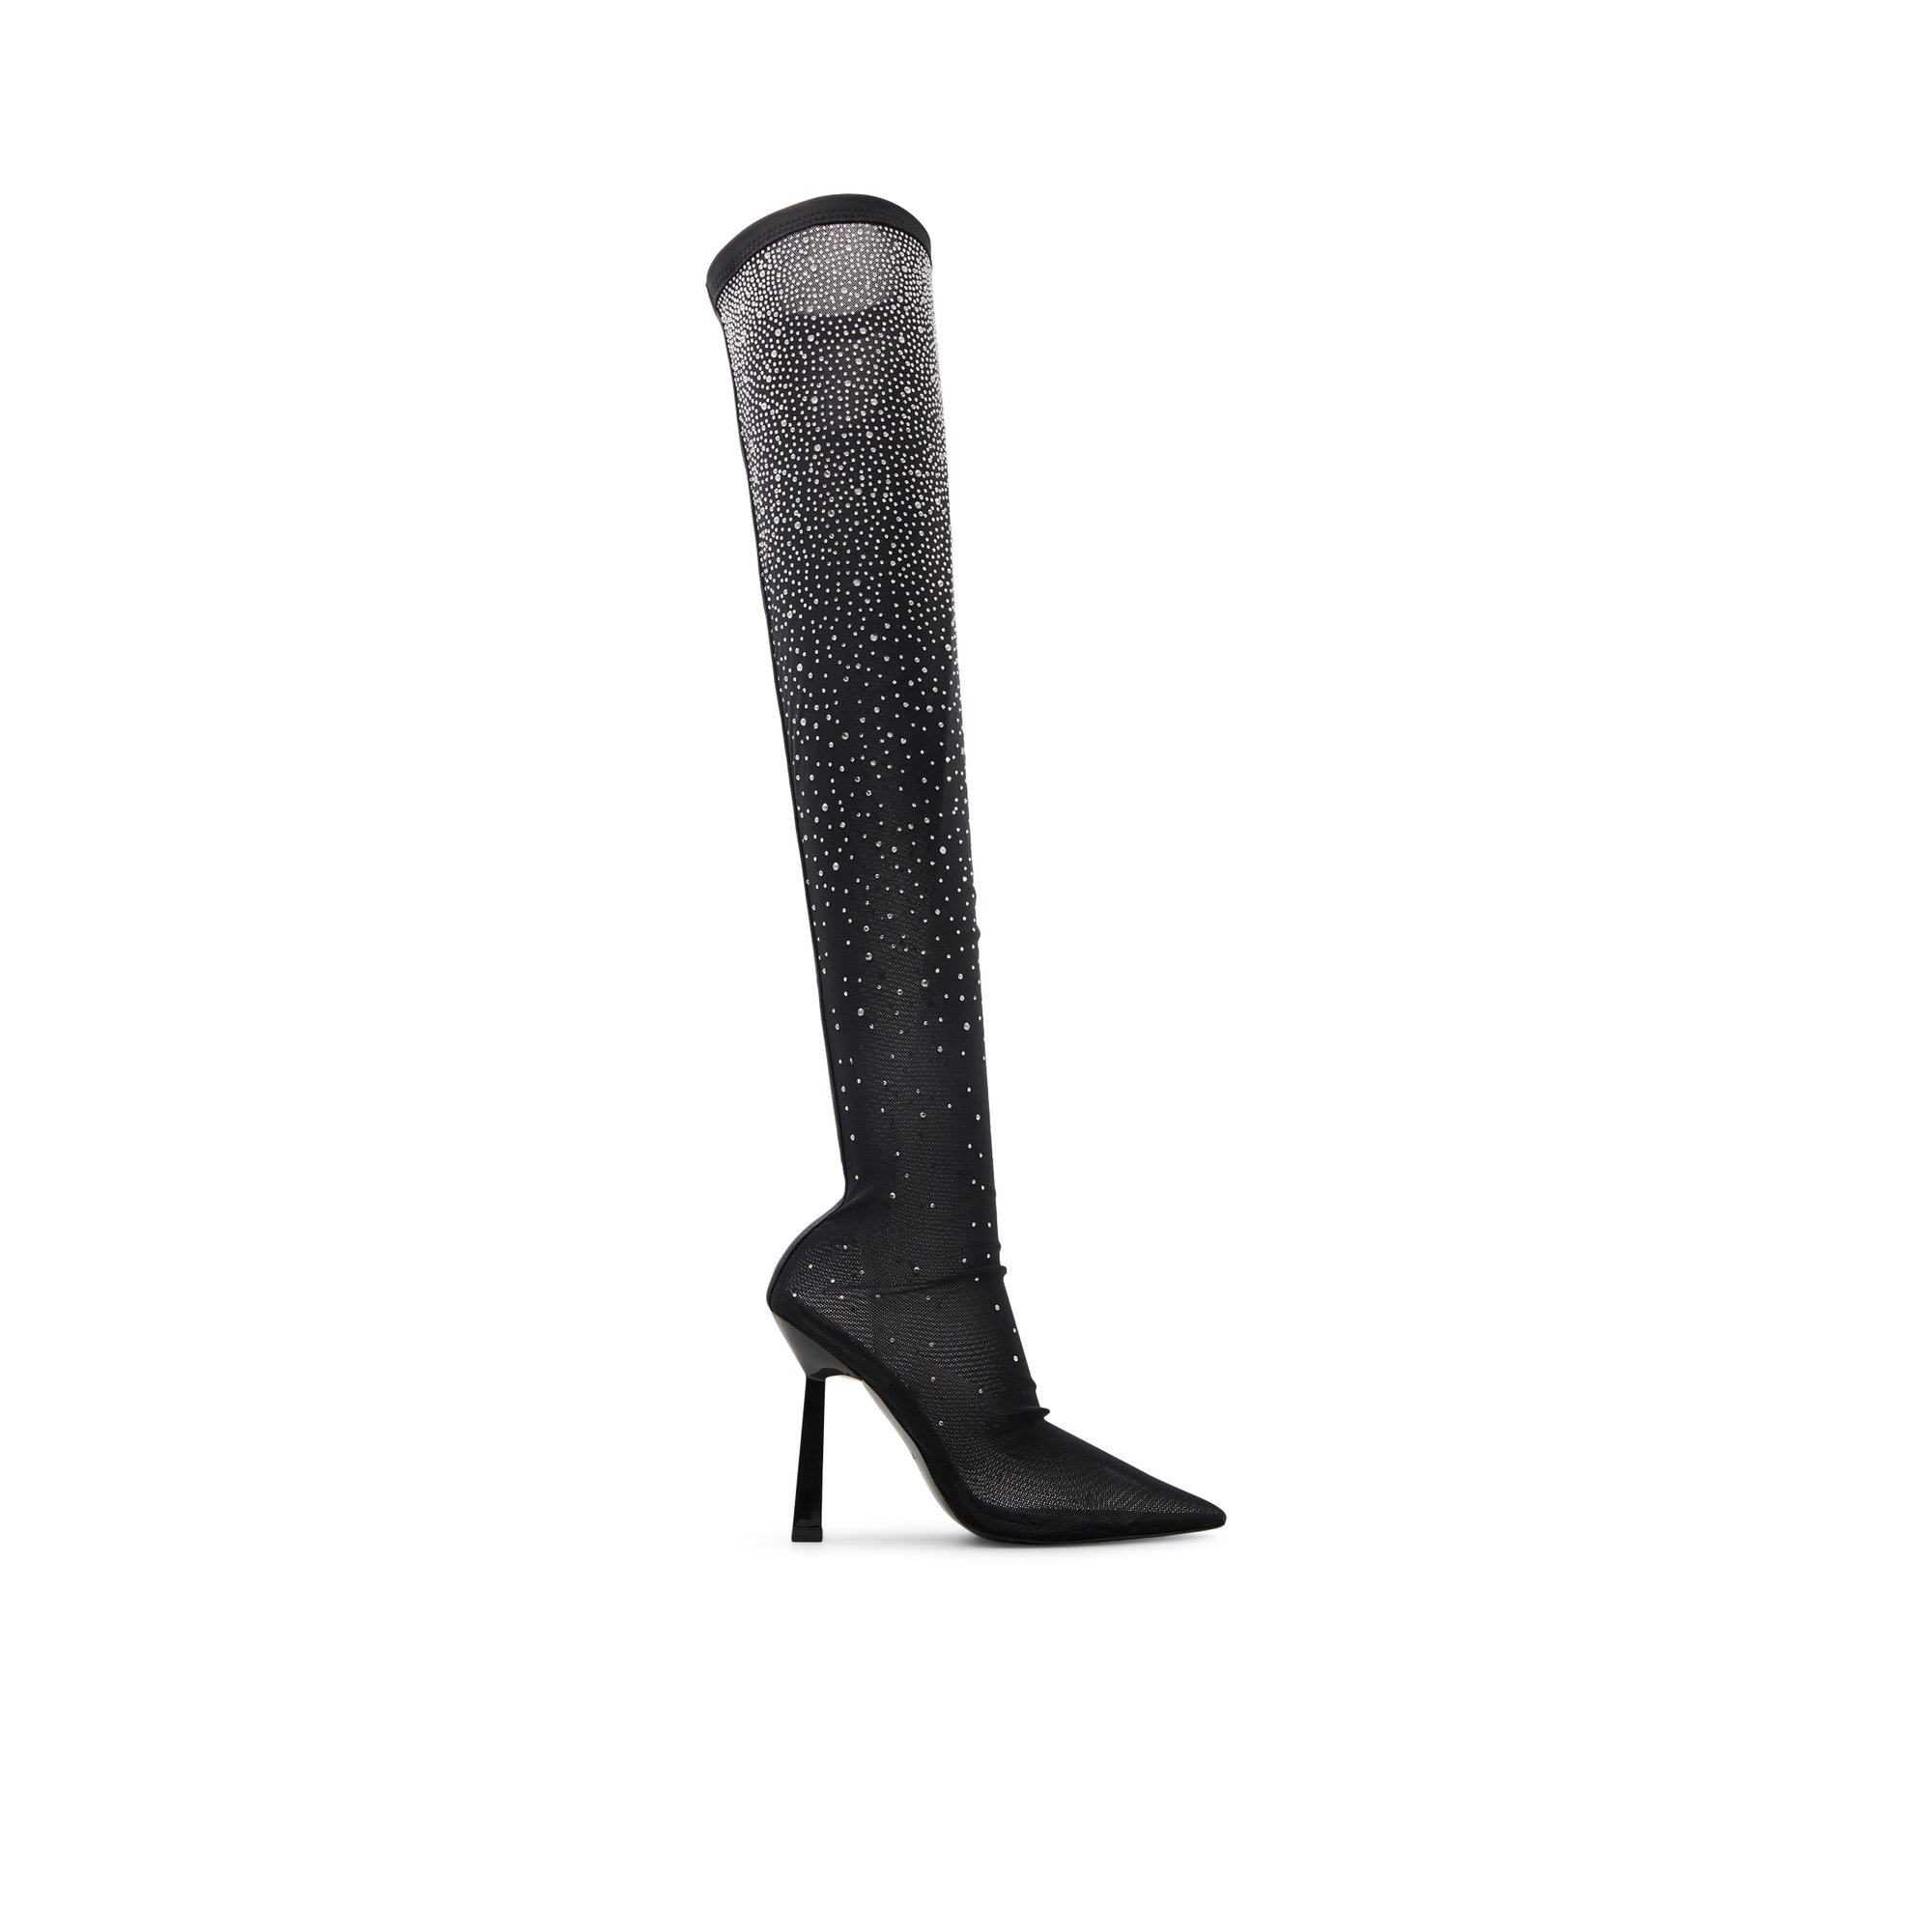 ALDO Vittoria - Women's Boots Dress - Black